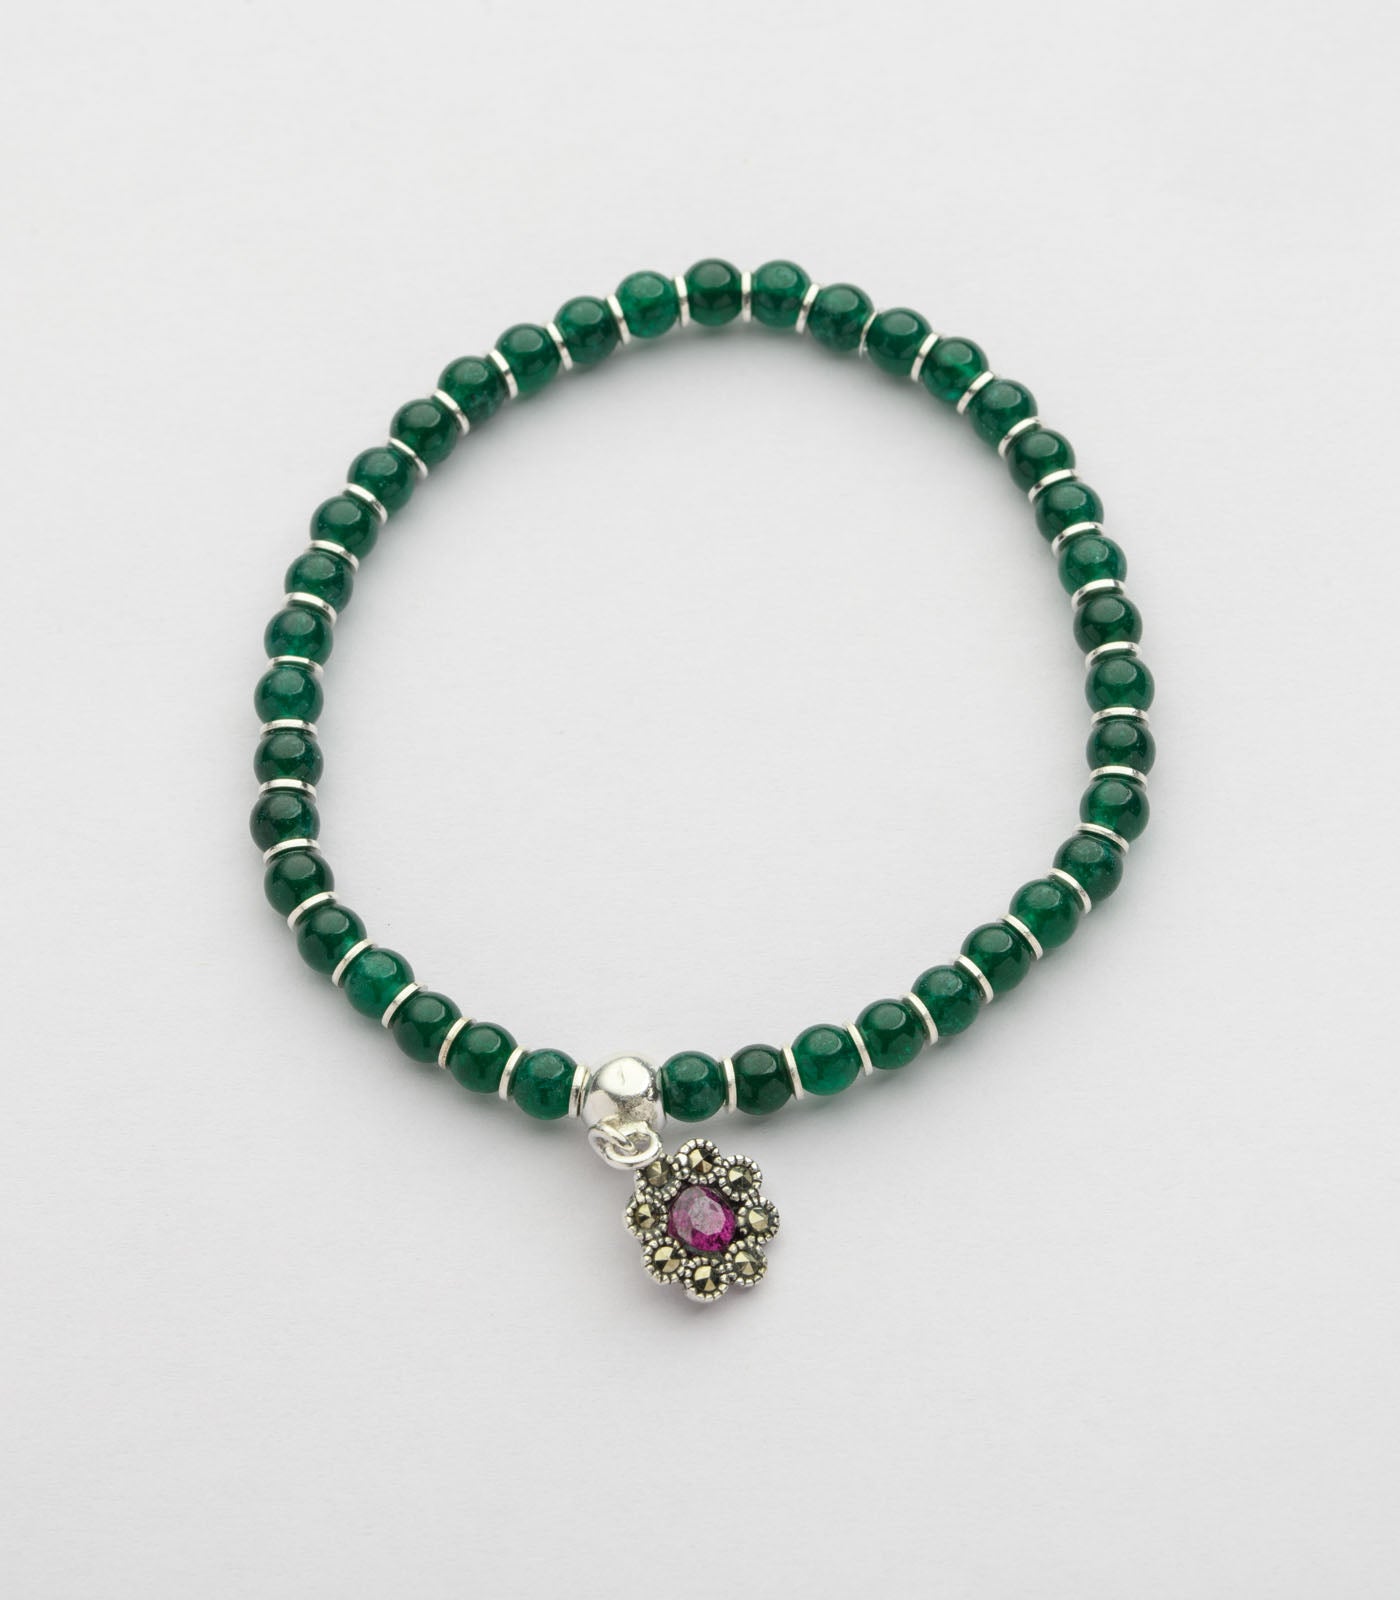 Floral Charm Green Beads Bracelet (Silver)